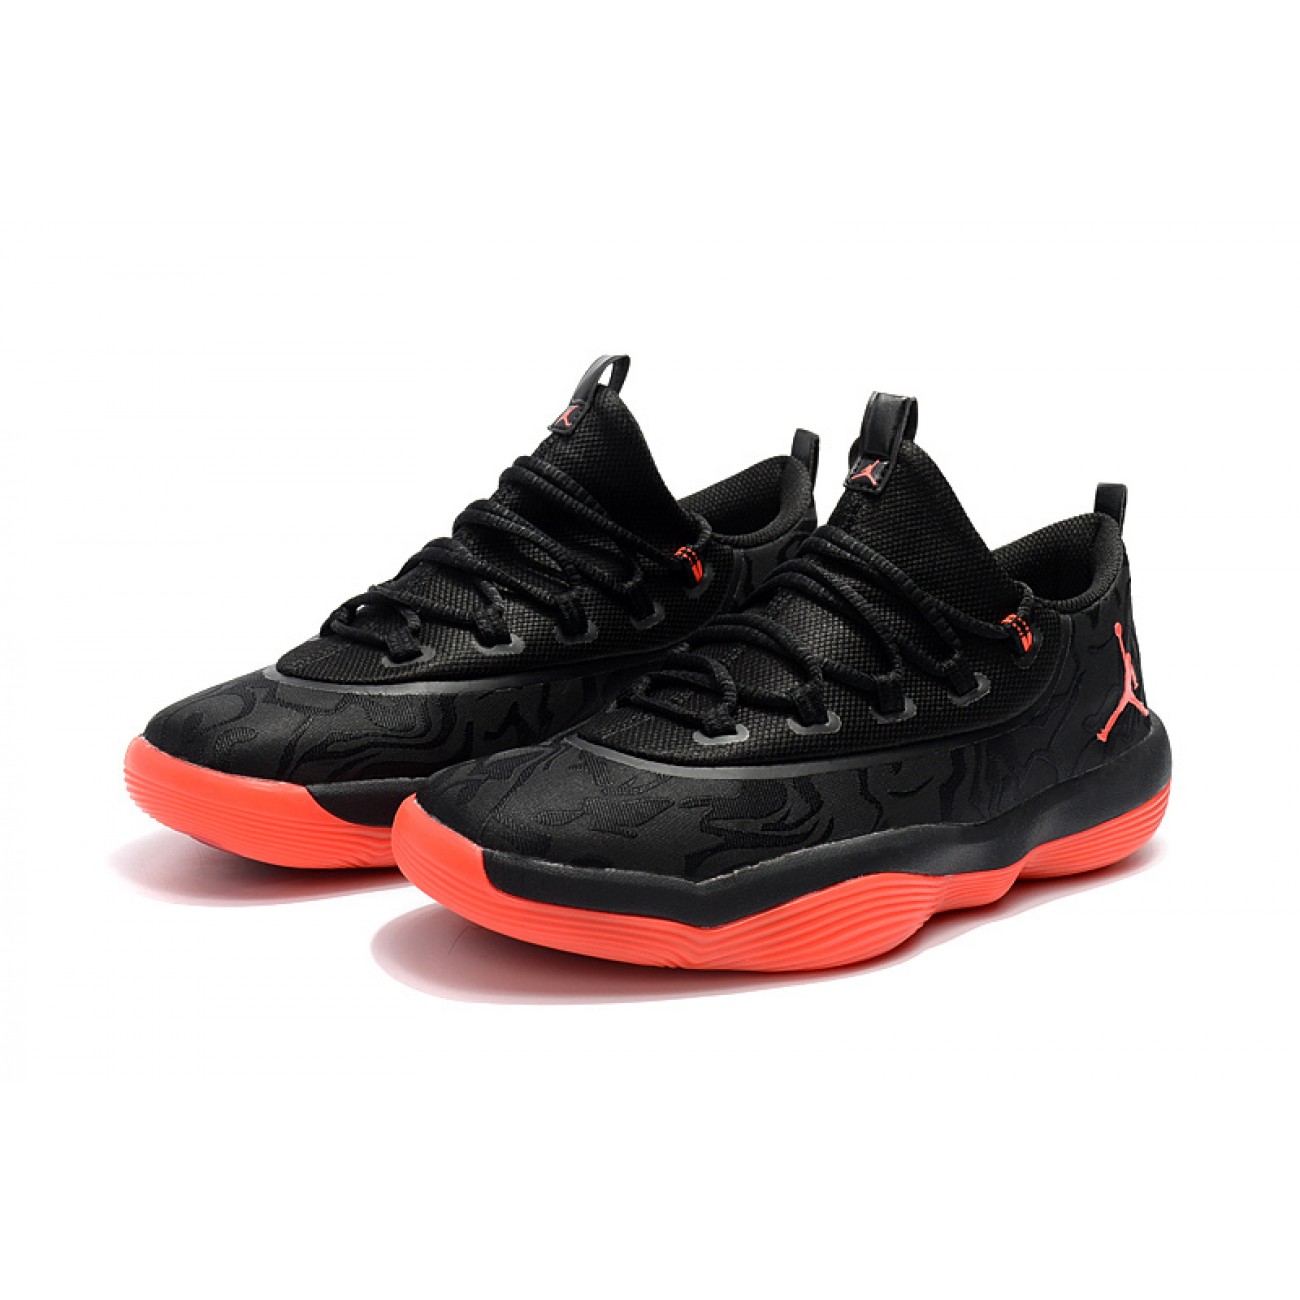 Air Jordan Super Fly Low Basketball Shoes Black/Red